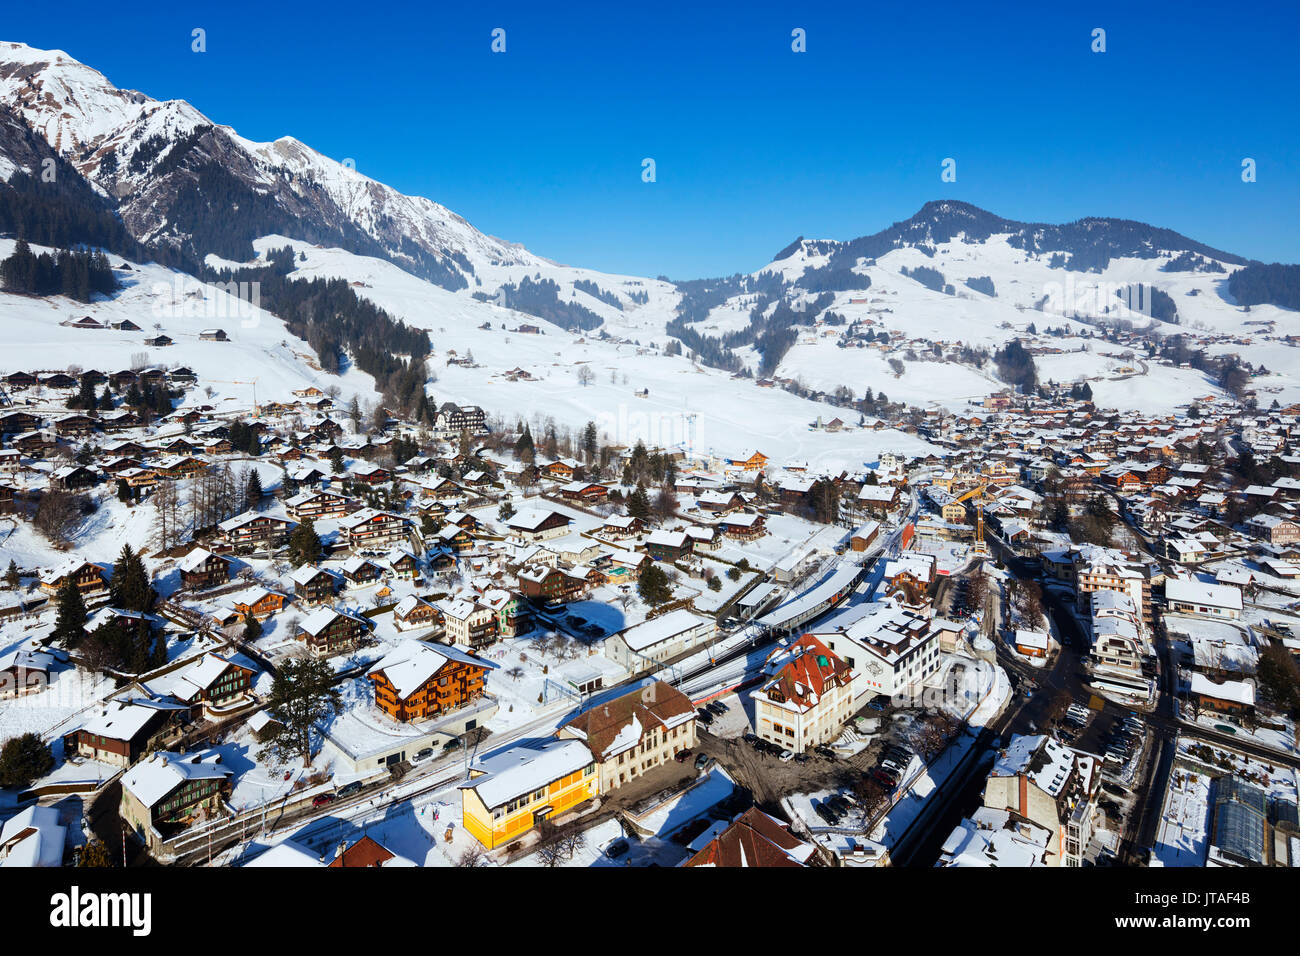 Vista aerea, Chateau-d'Oex, Vaud, alpi svizzere, Svizzera, Europa Foto Stock